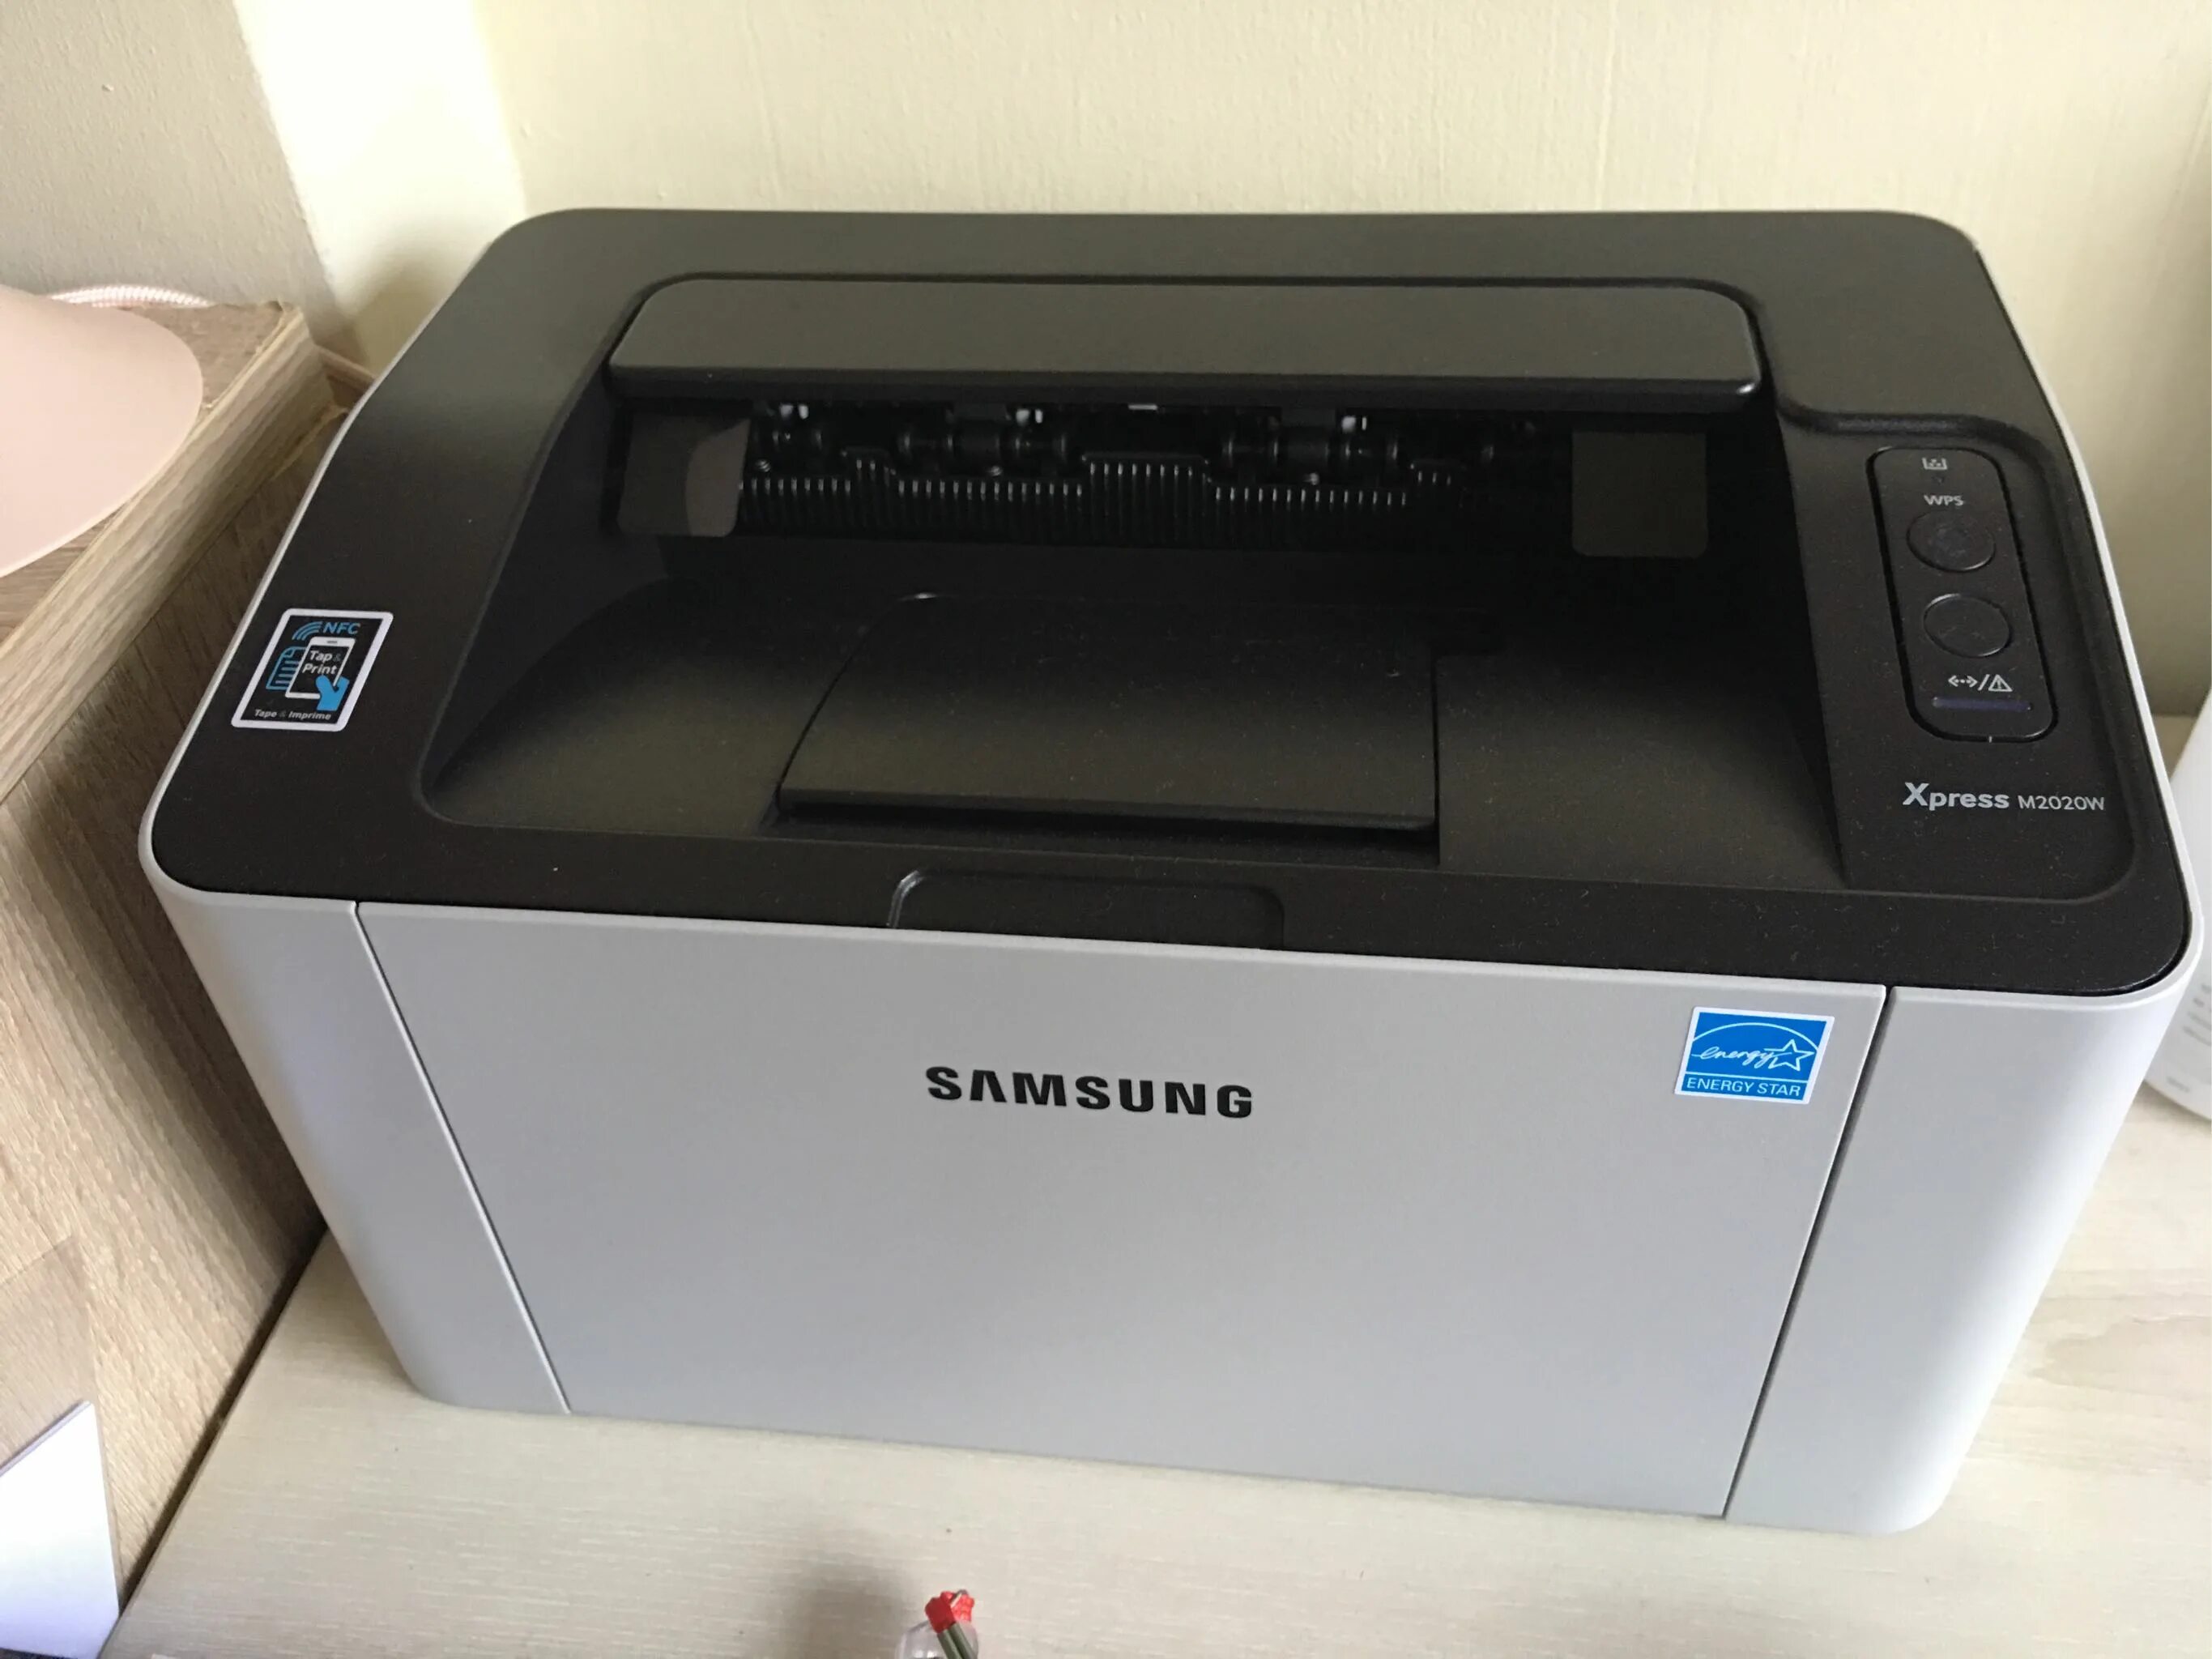 Samsung m2020 купить. Самсунг 2020 принтер. Samsung Xpress m2020. Samsung m2020. Принтер Samsung Xpress m2020w.